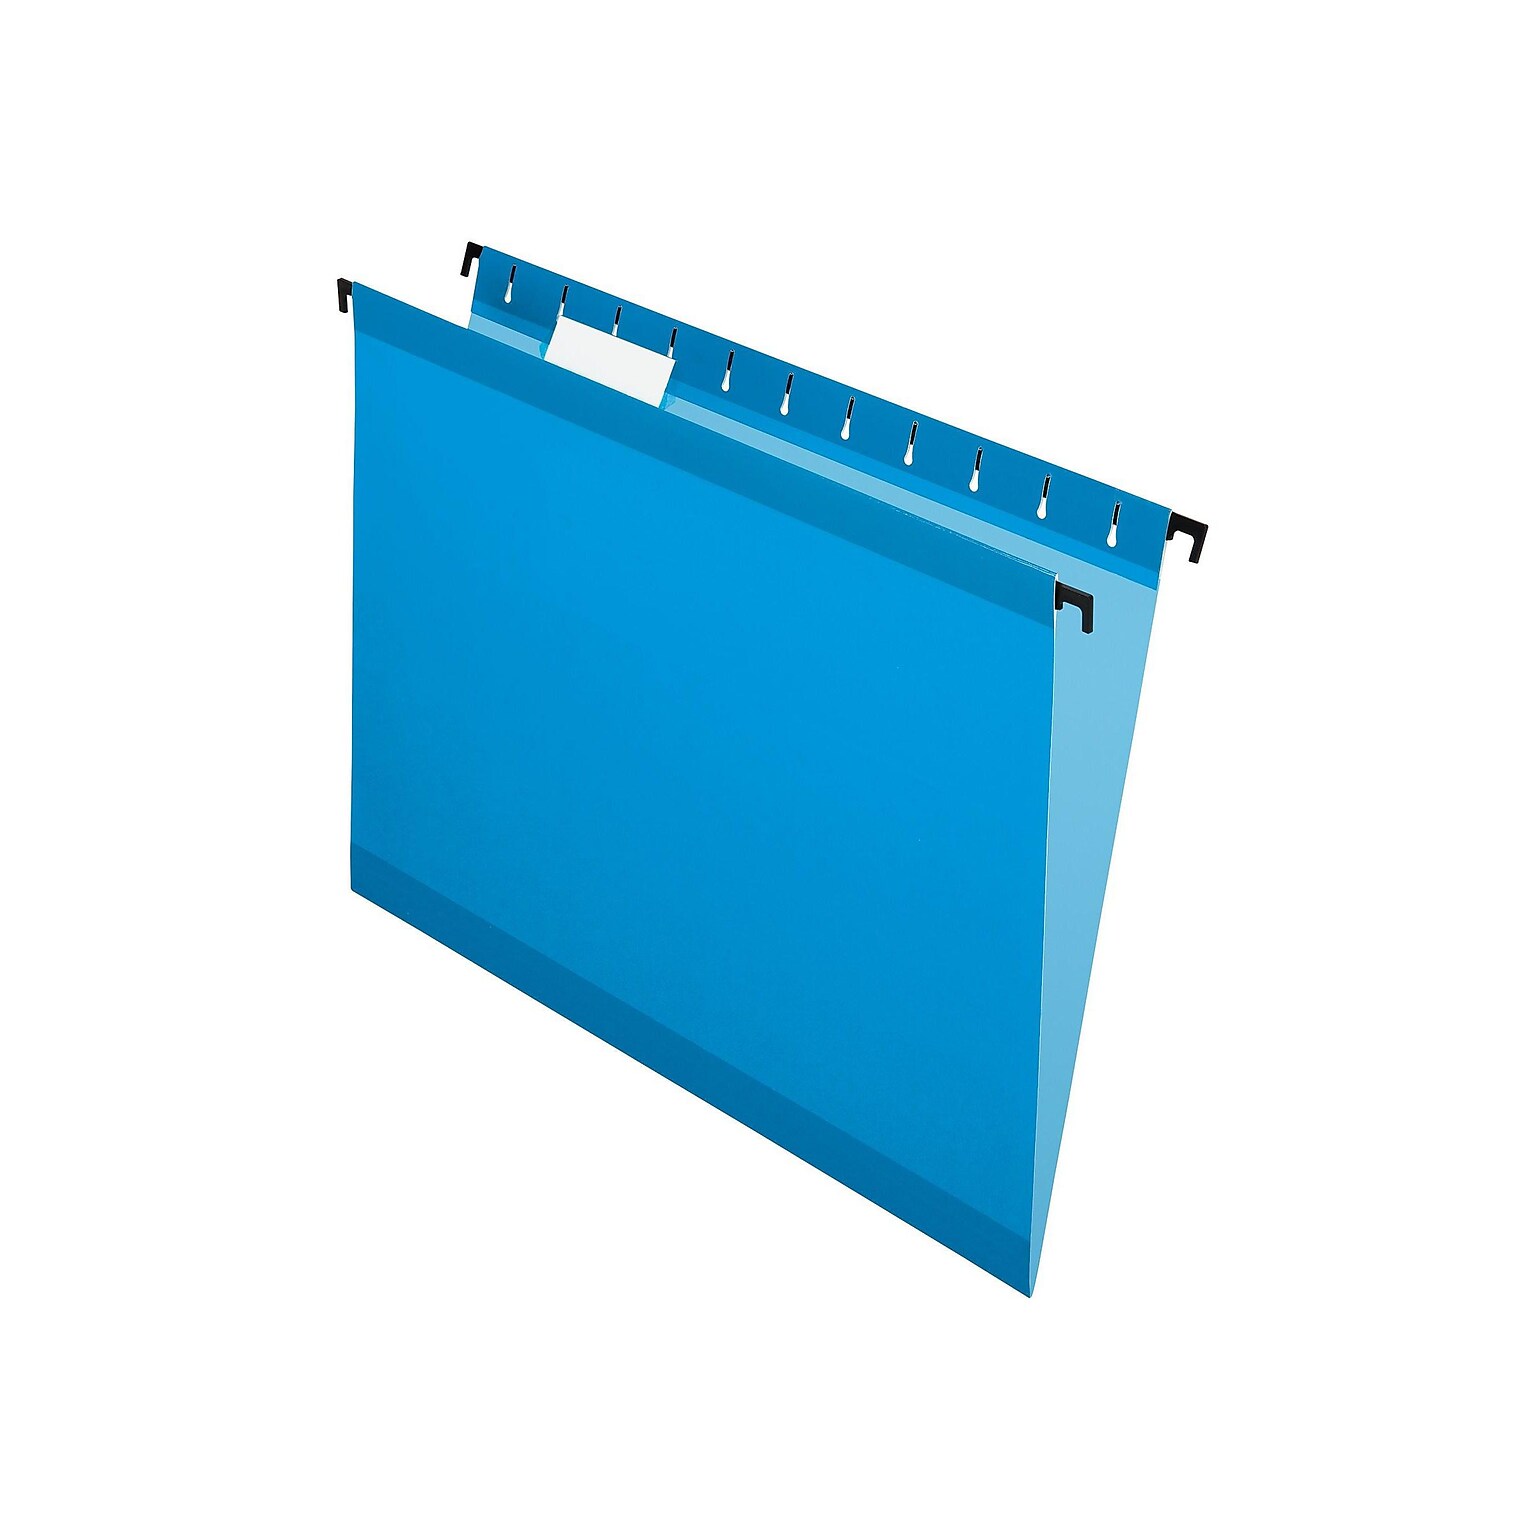 Pendaflex SureHook Reinforced Hanging File Folders, 5-Tab, Letter Size, Blue, 20/Box (PFX 6152 1/5 BLU)